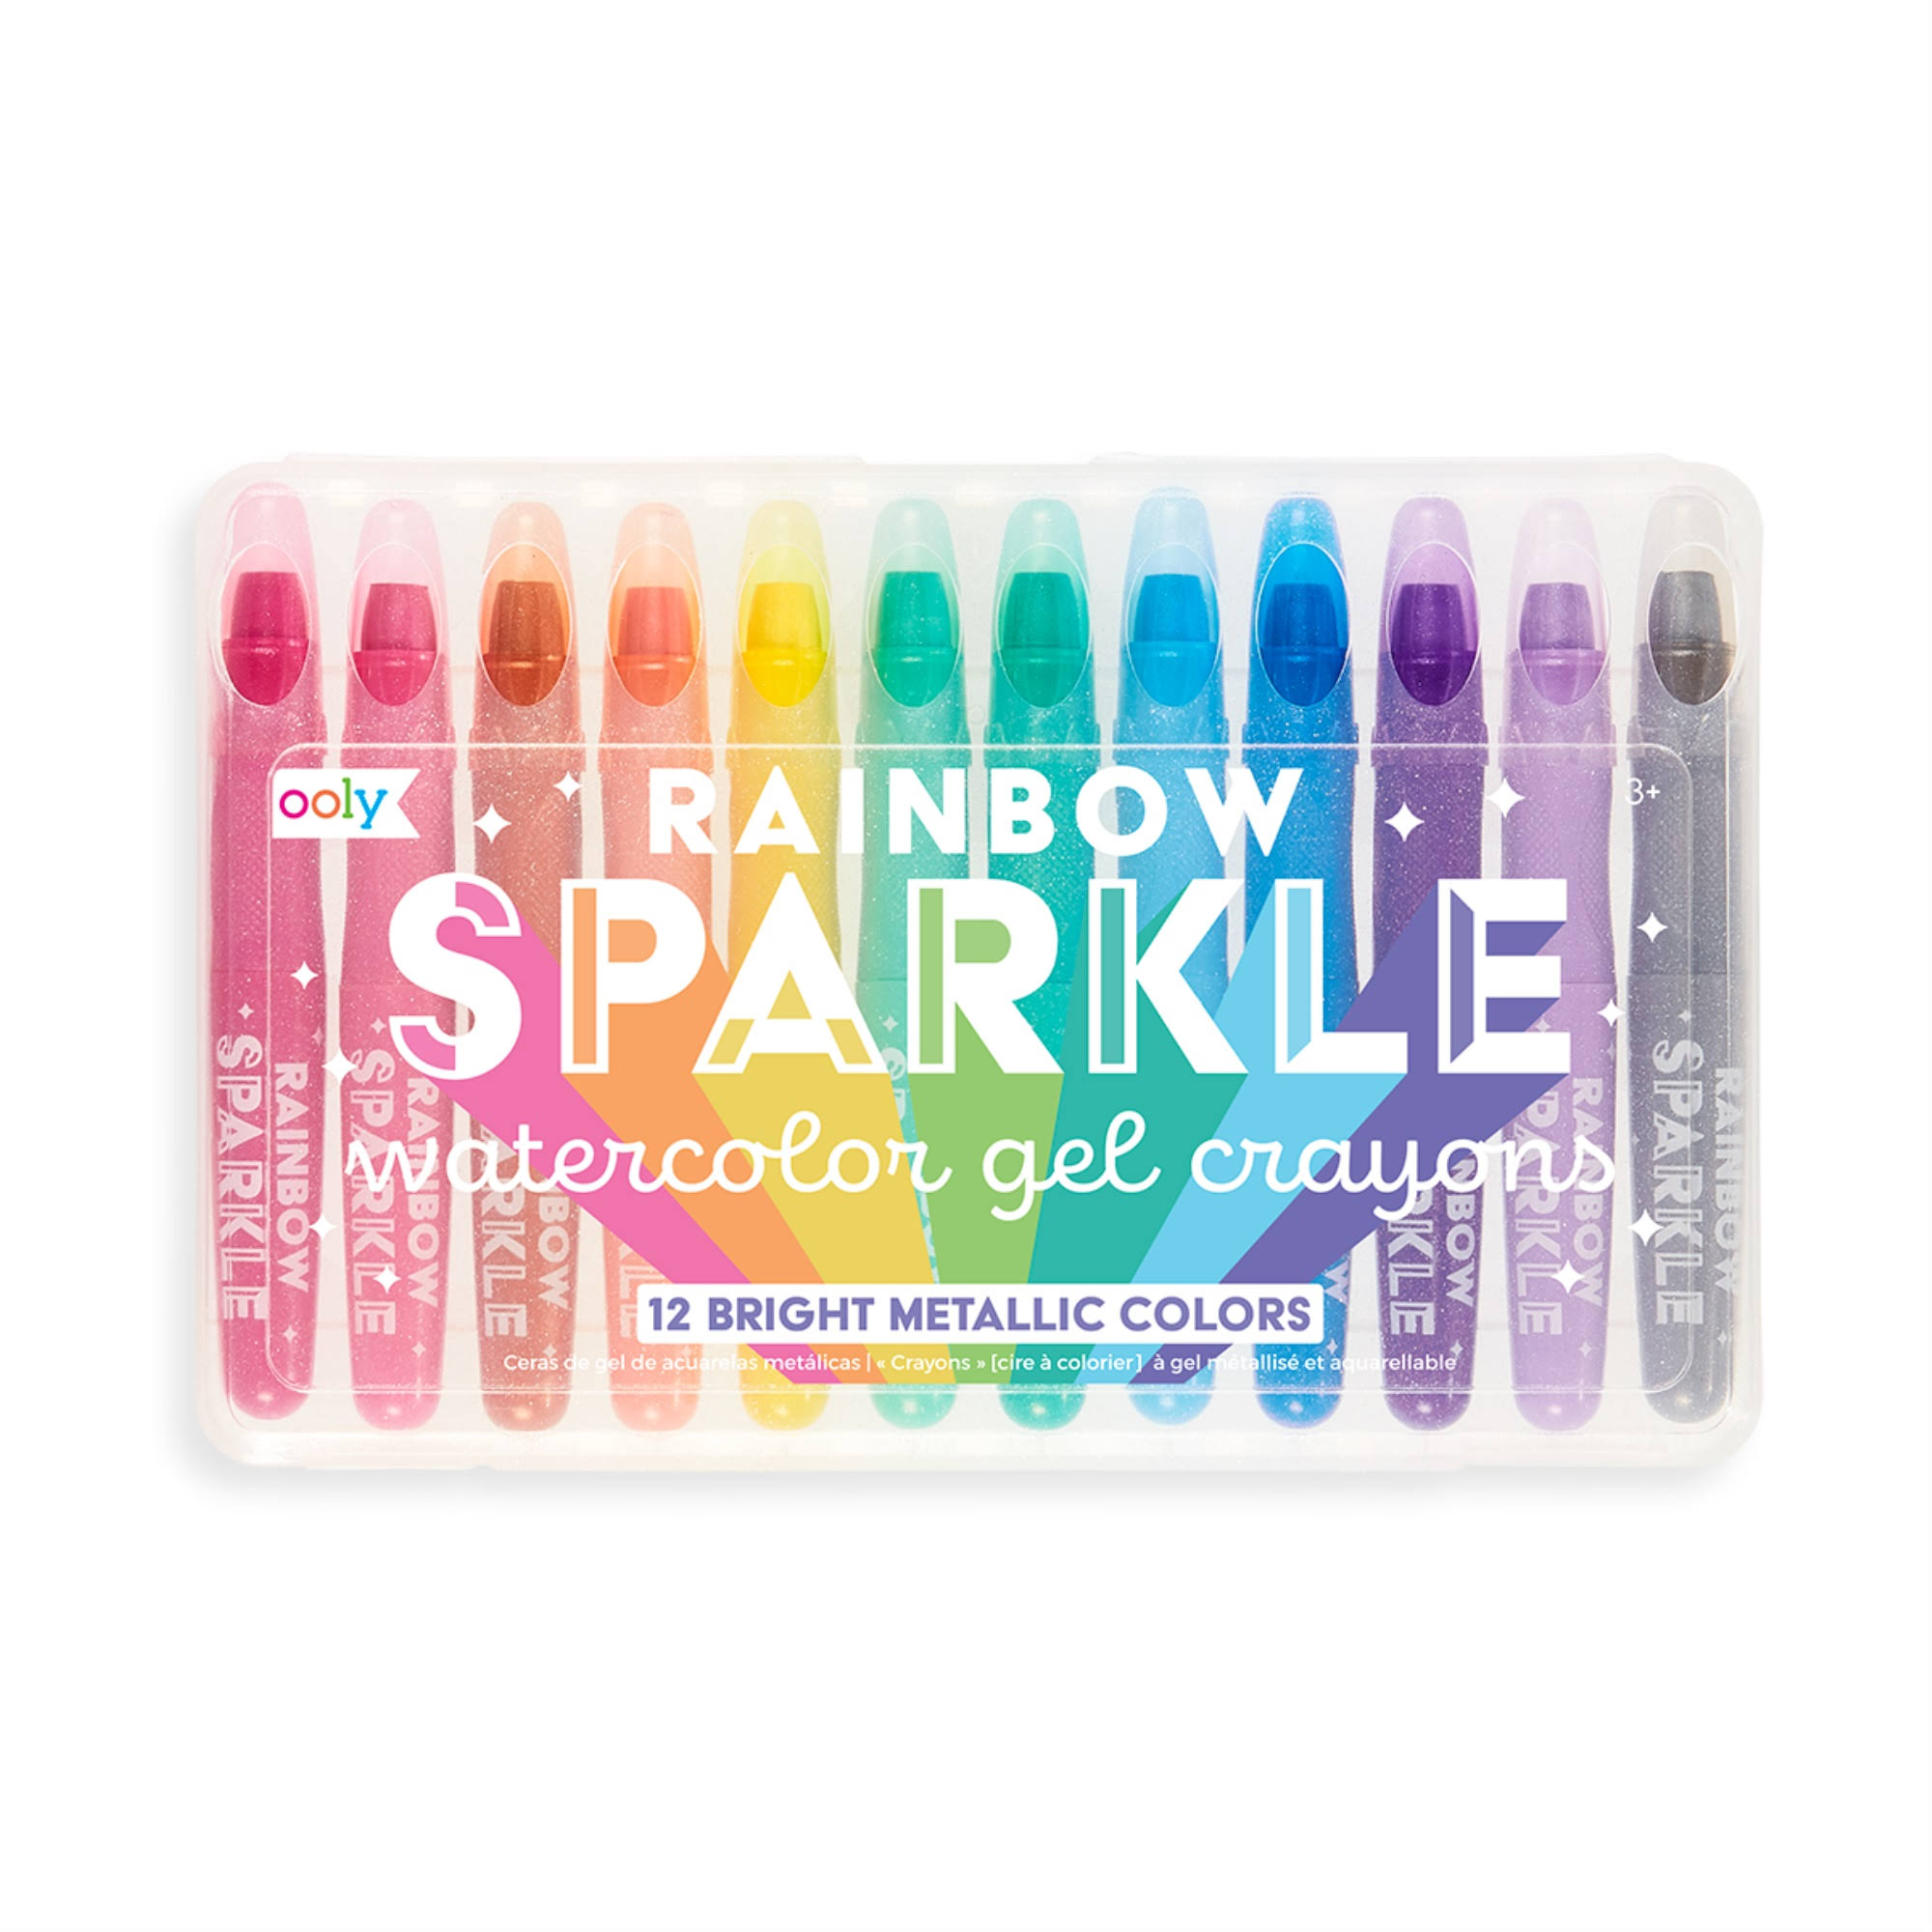 Sparkle Watercolor Gel Crayons - Set of 12